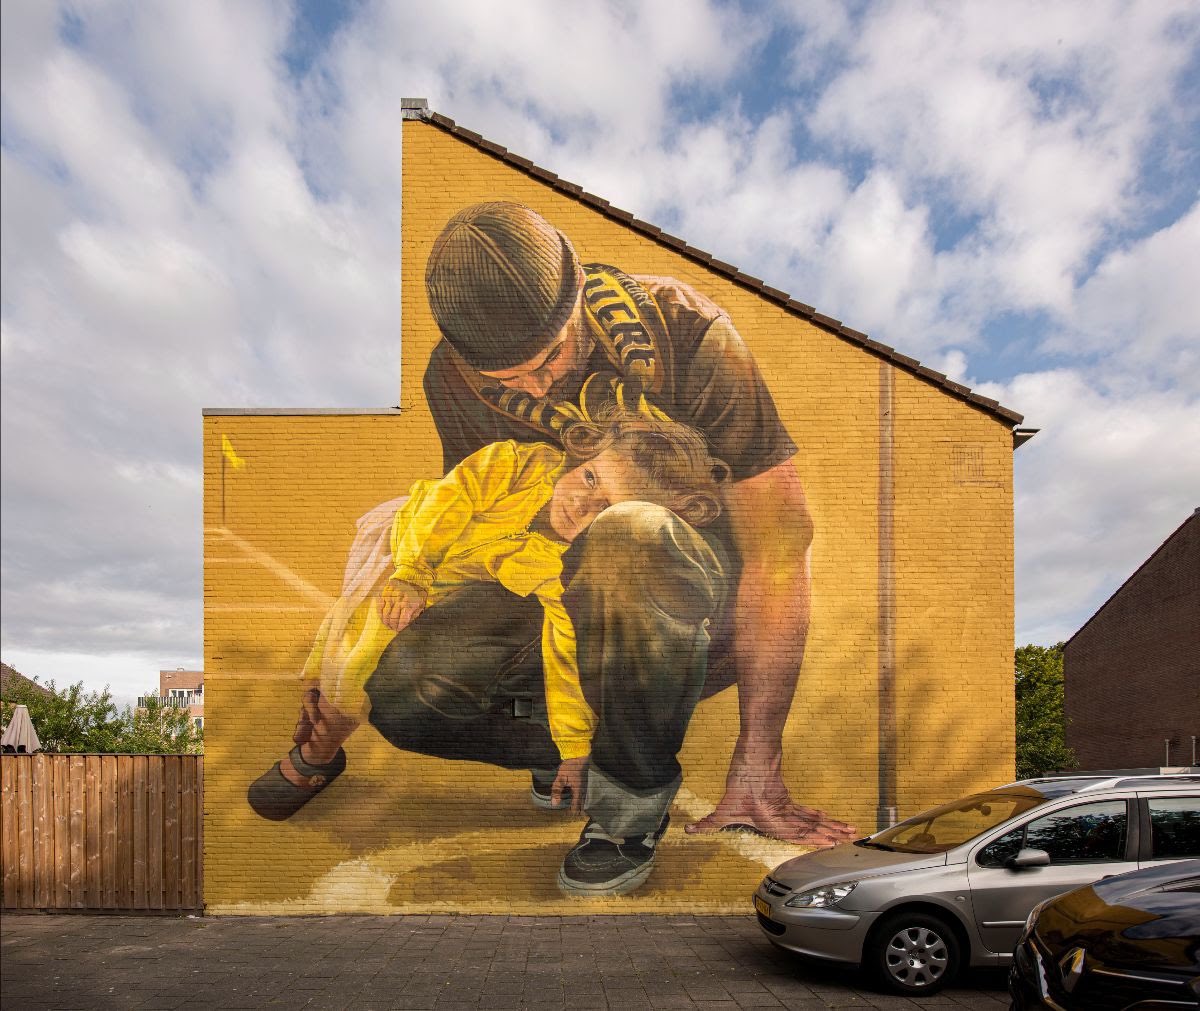 #StreetArt by Case Maclaim📍Breda, Netherlands 🇳🇱 
#GoodMorningEveryone 🌞#HappyNewWeek 🍀